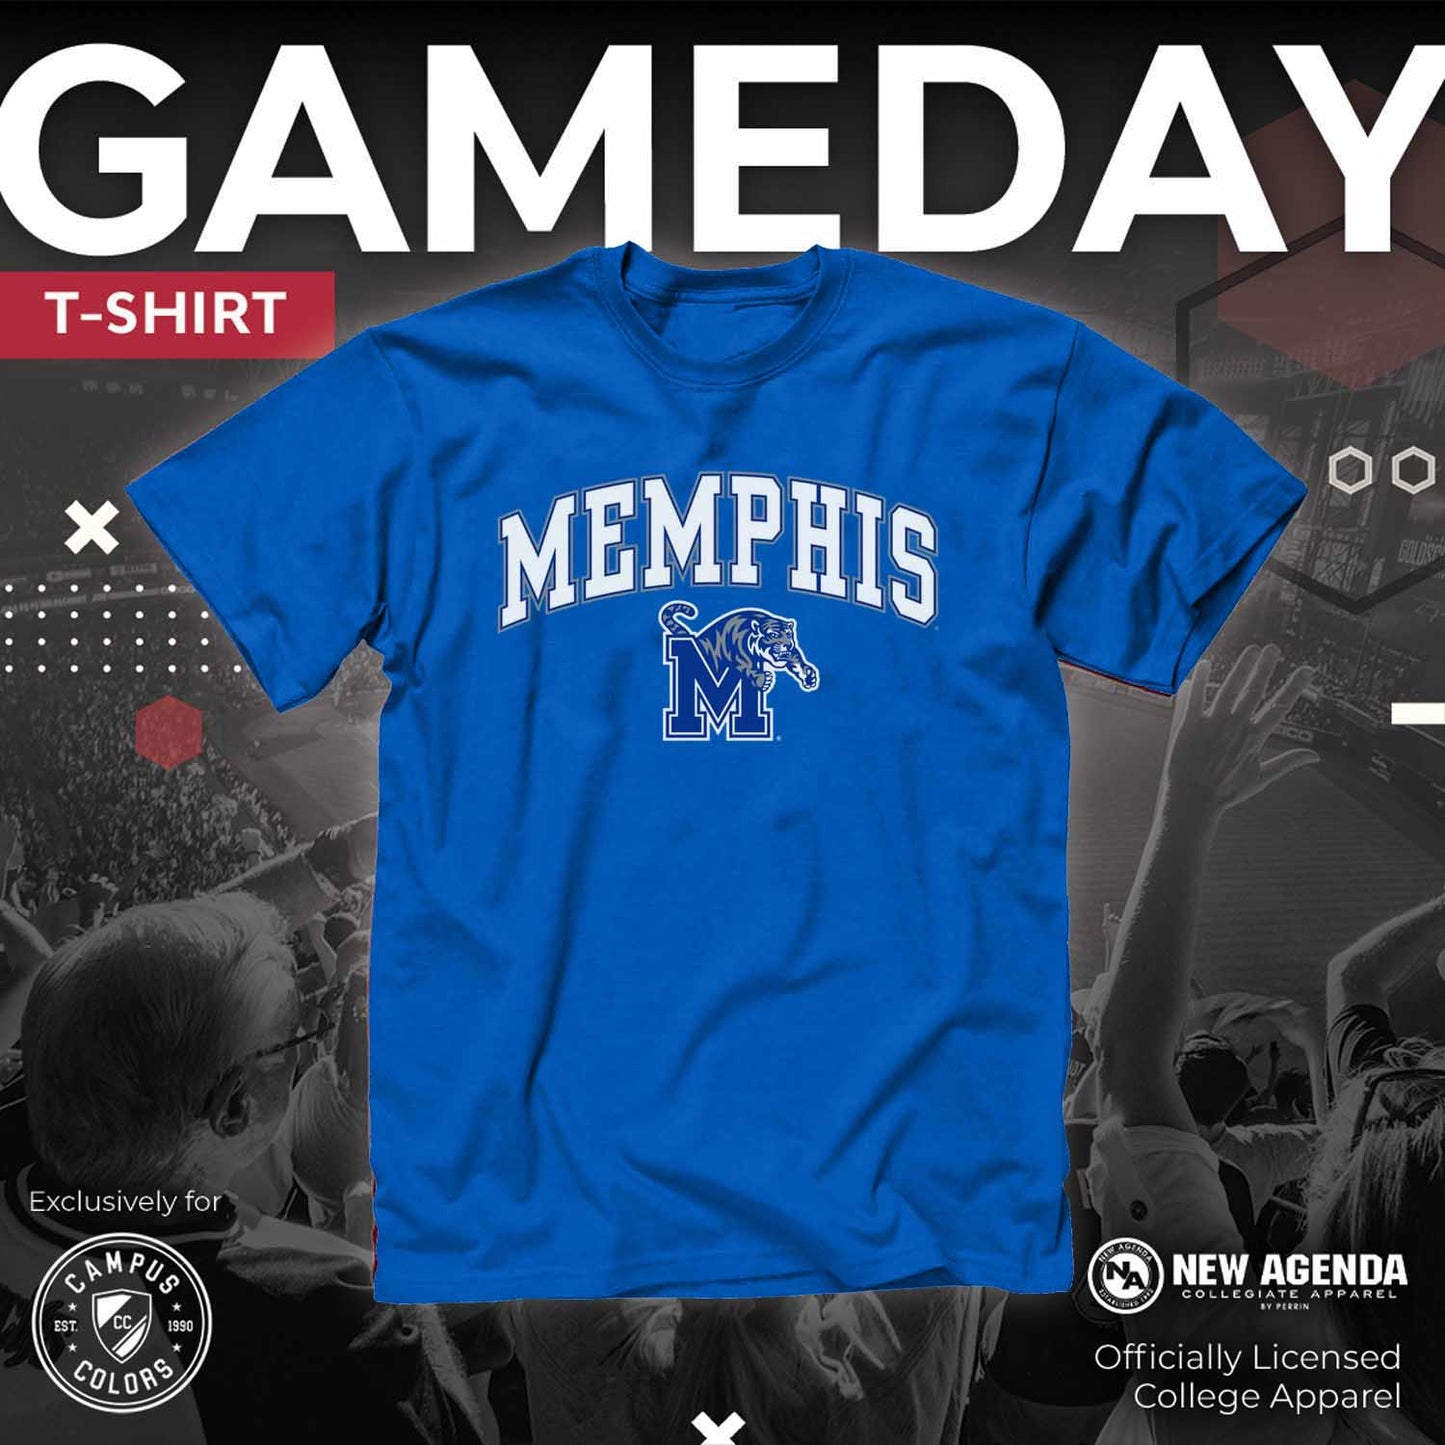 Memphis Tigers NCAA Adult Gameday Cotton T-Shirt - Royal